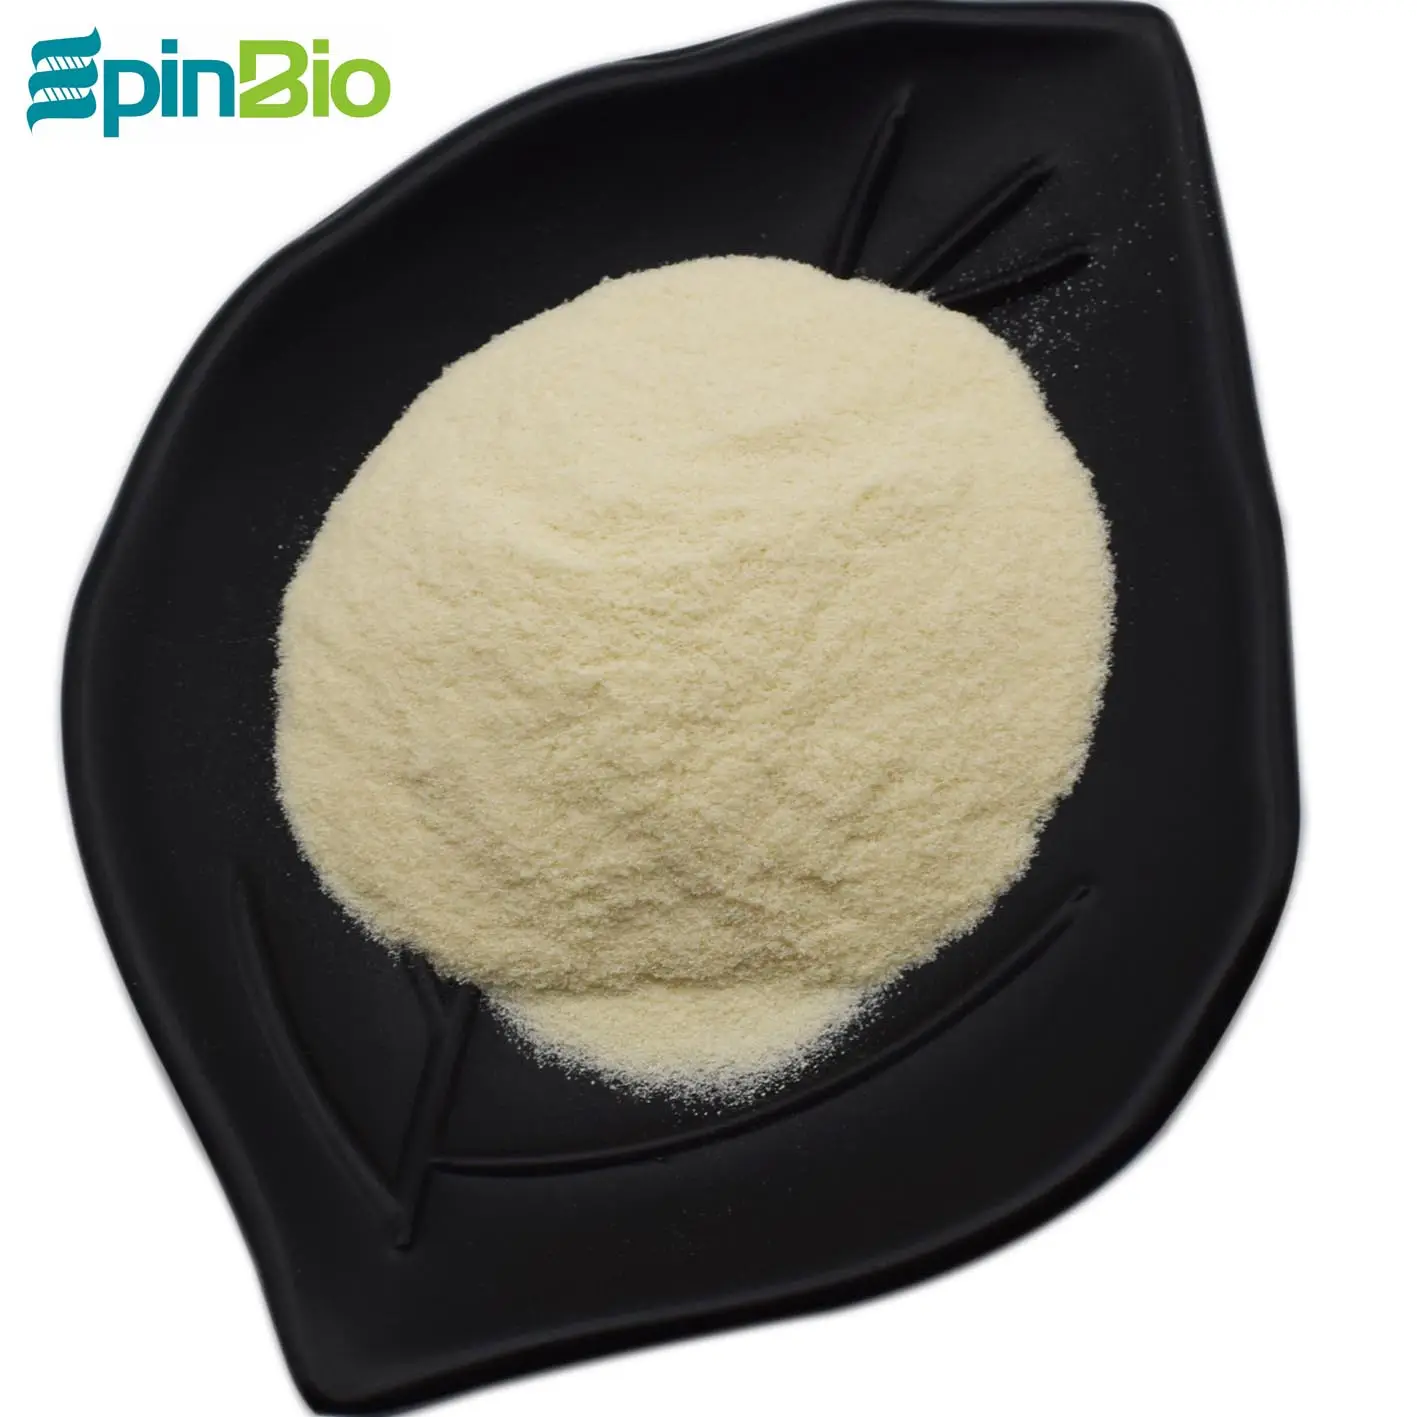 Epinbio provide high quality water soluble 80% carboxymethyl chitosan powder